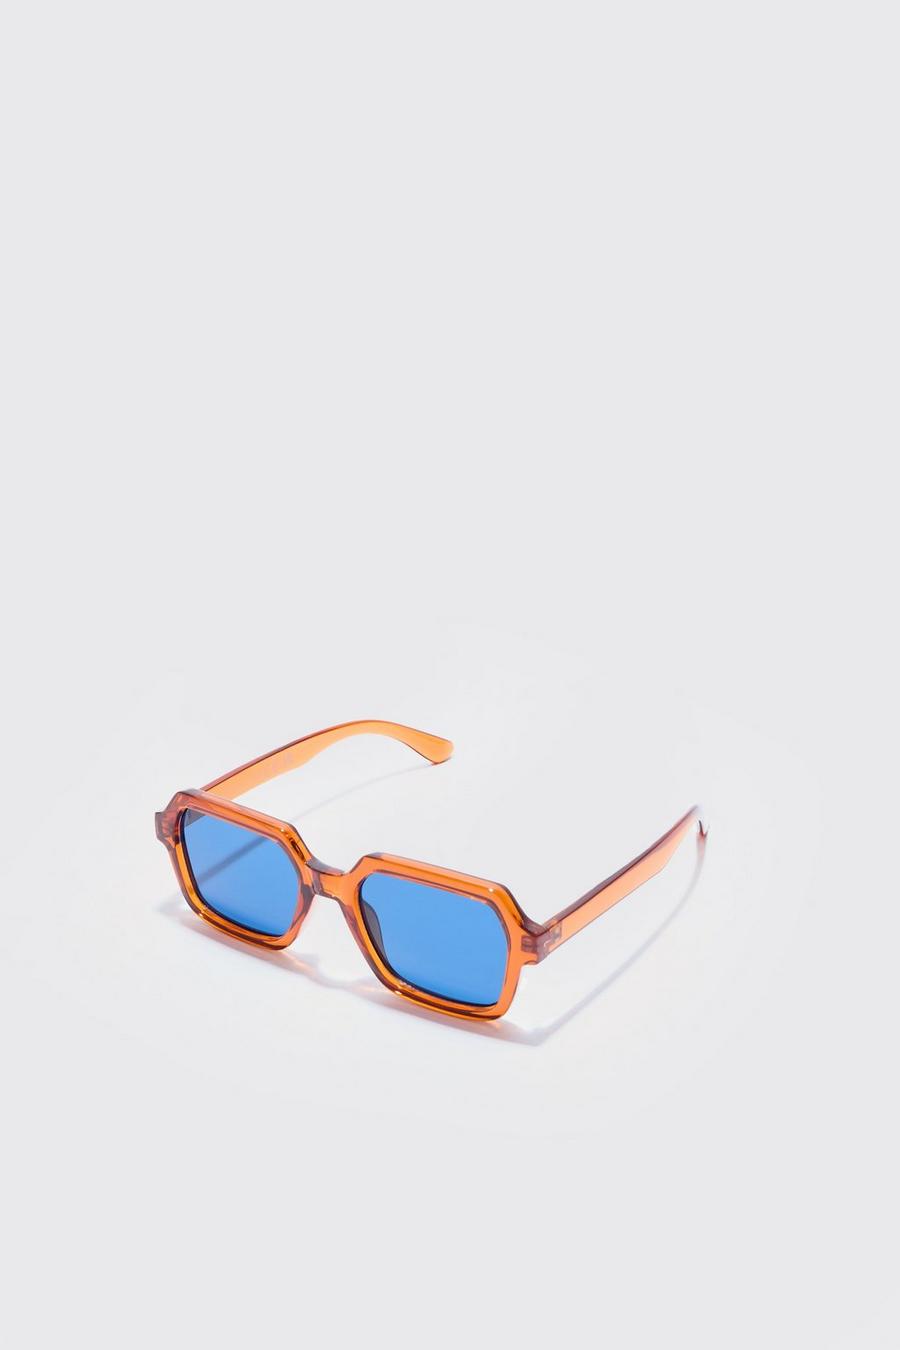 Orange Tom Ford Buckley 02 Sunglasses